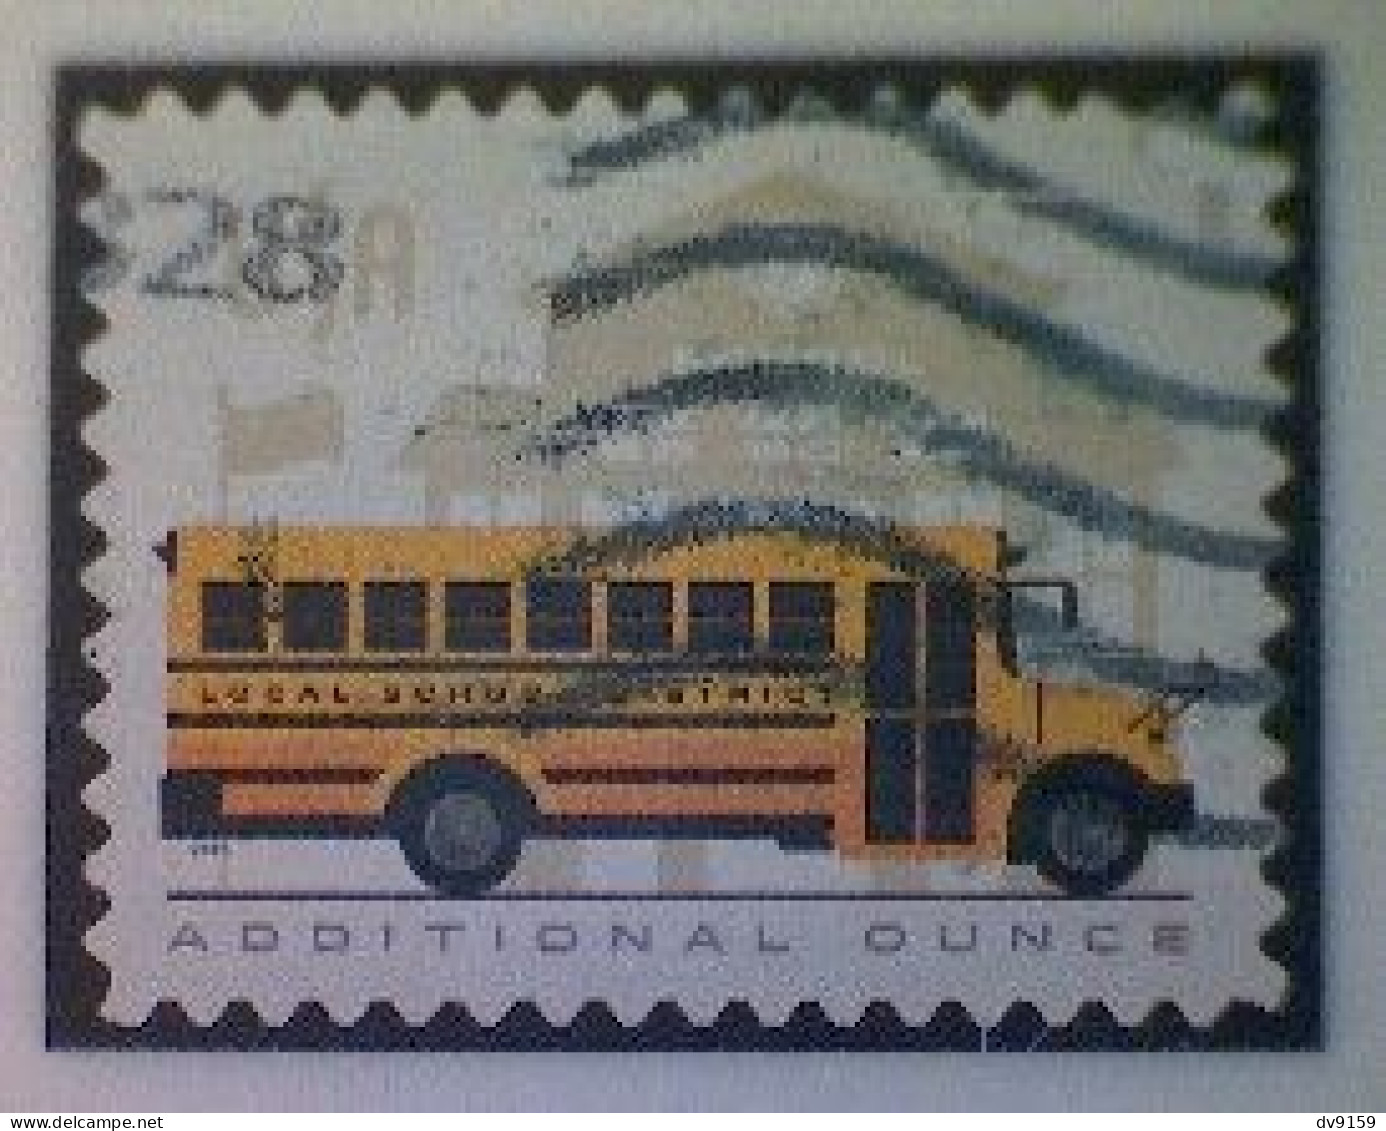 United States, Scott #5740, Used(o), 2023, School Bus (24¢), Multicolored - Gebruikt